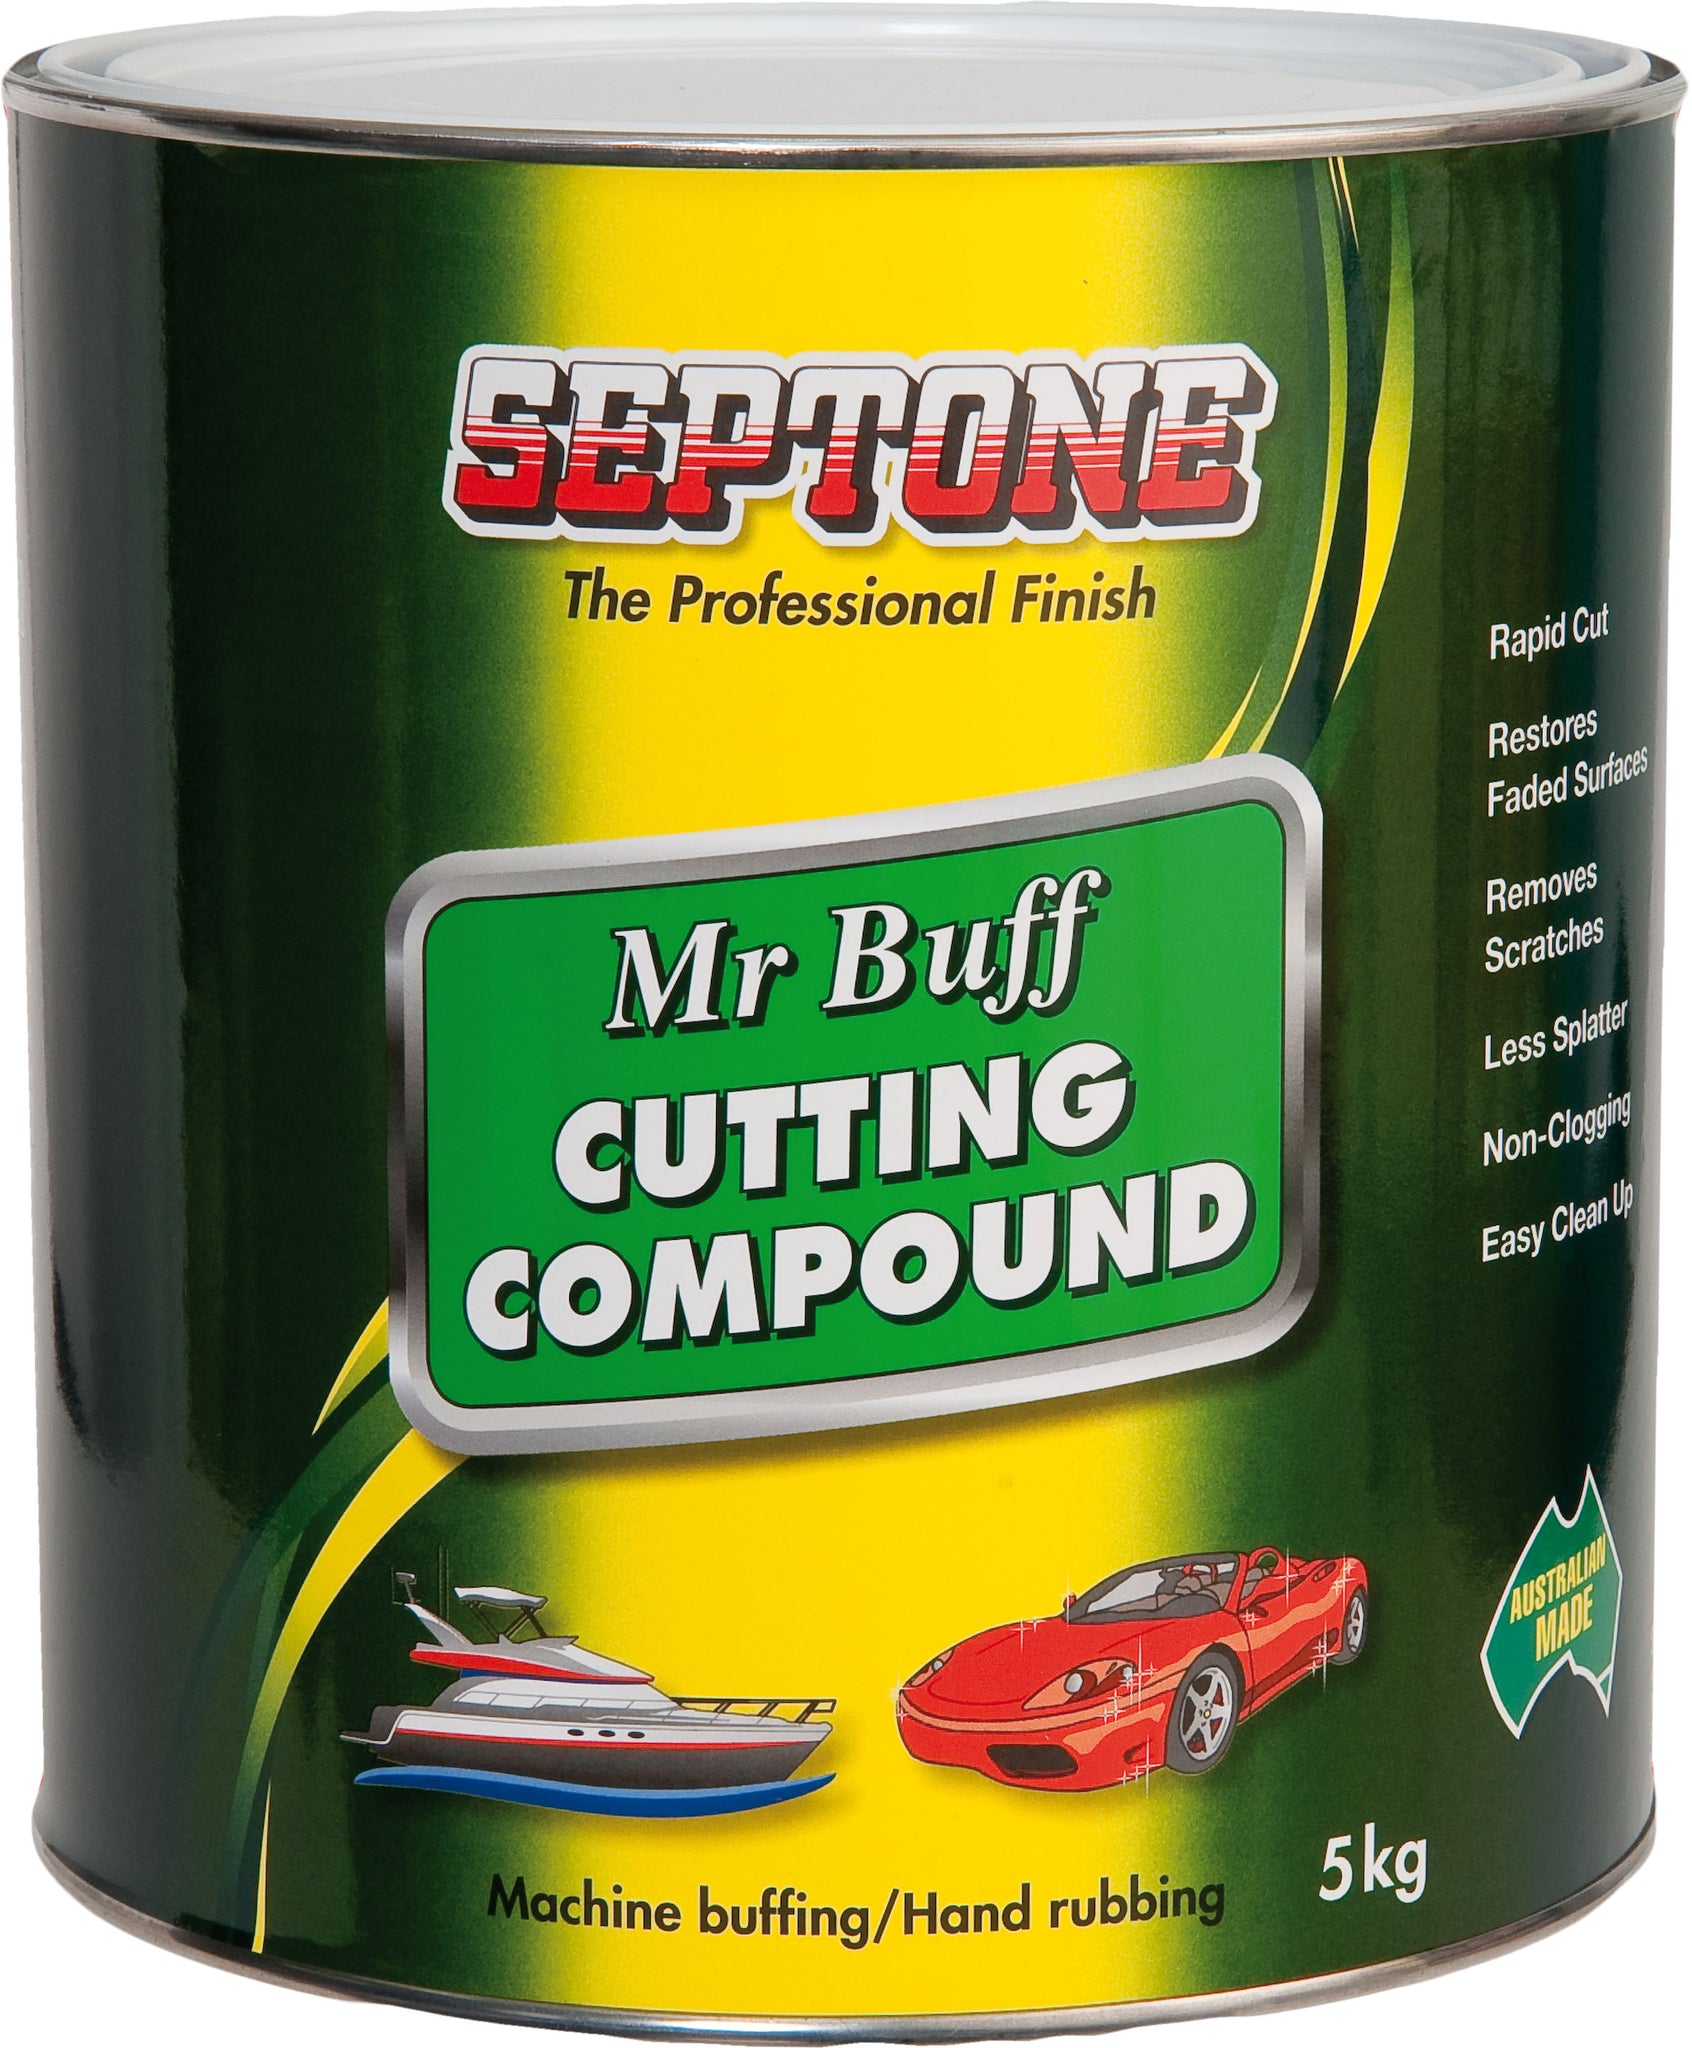 Septone® Mr Buff Cutting Compound - 500g